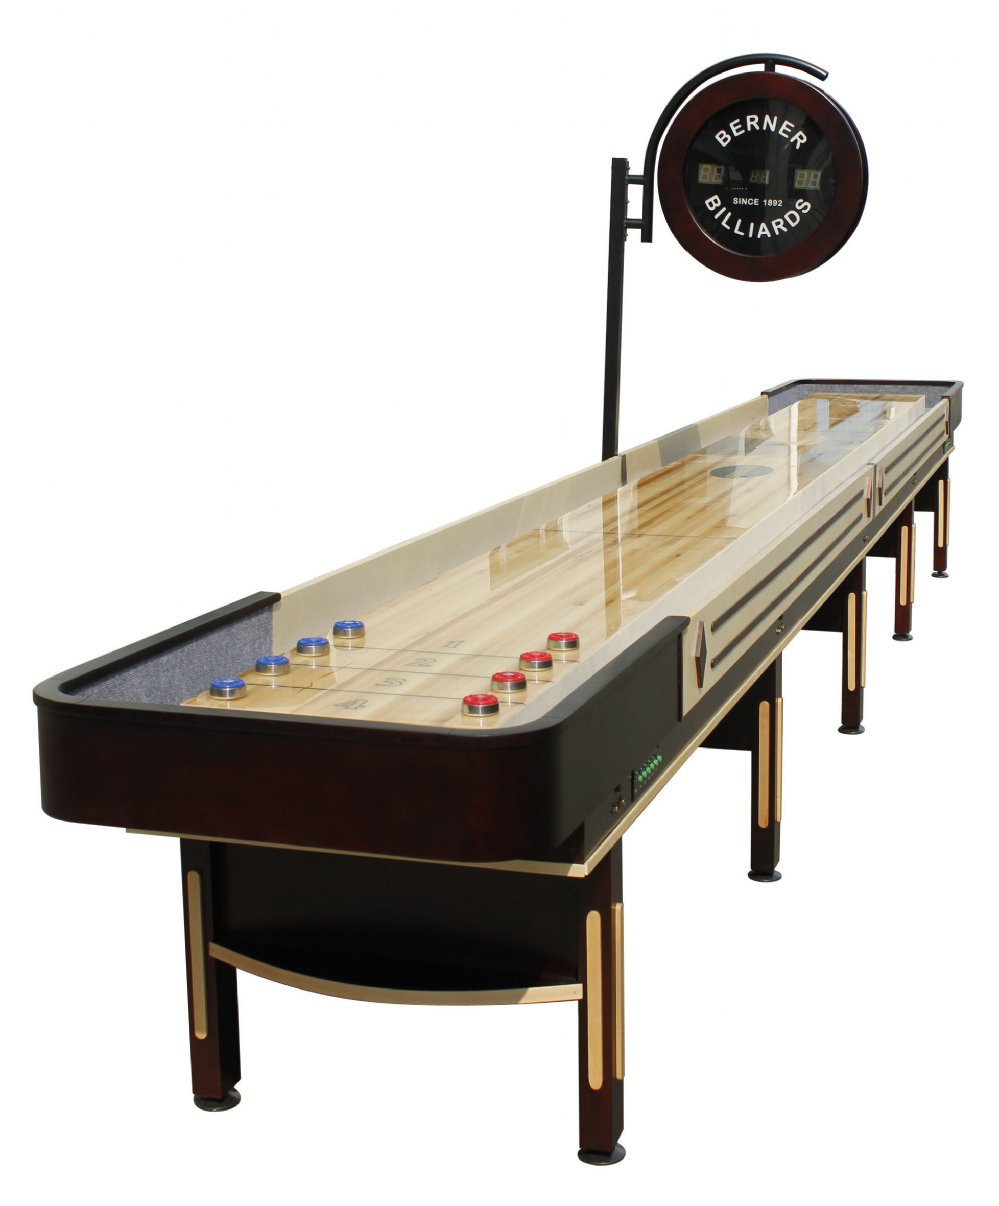 Berner Billiards Shuffleboard Table The Pro in Espresso & Maple. Available in 12, 14, 16, 18, 20